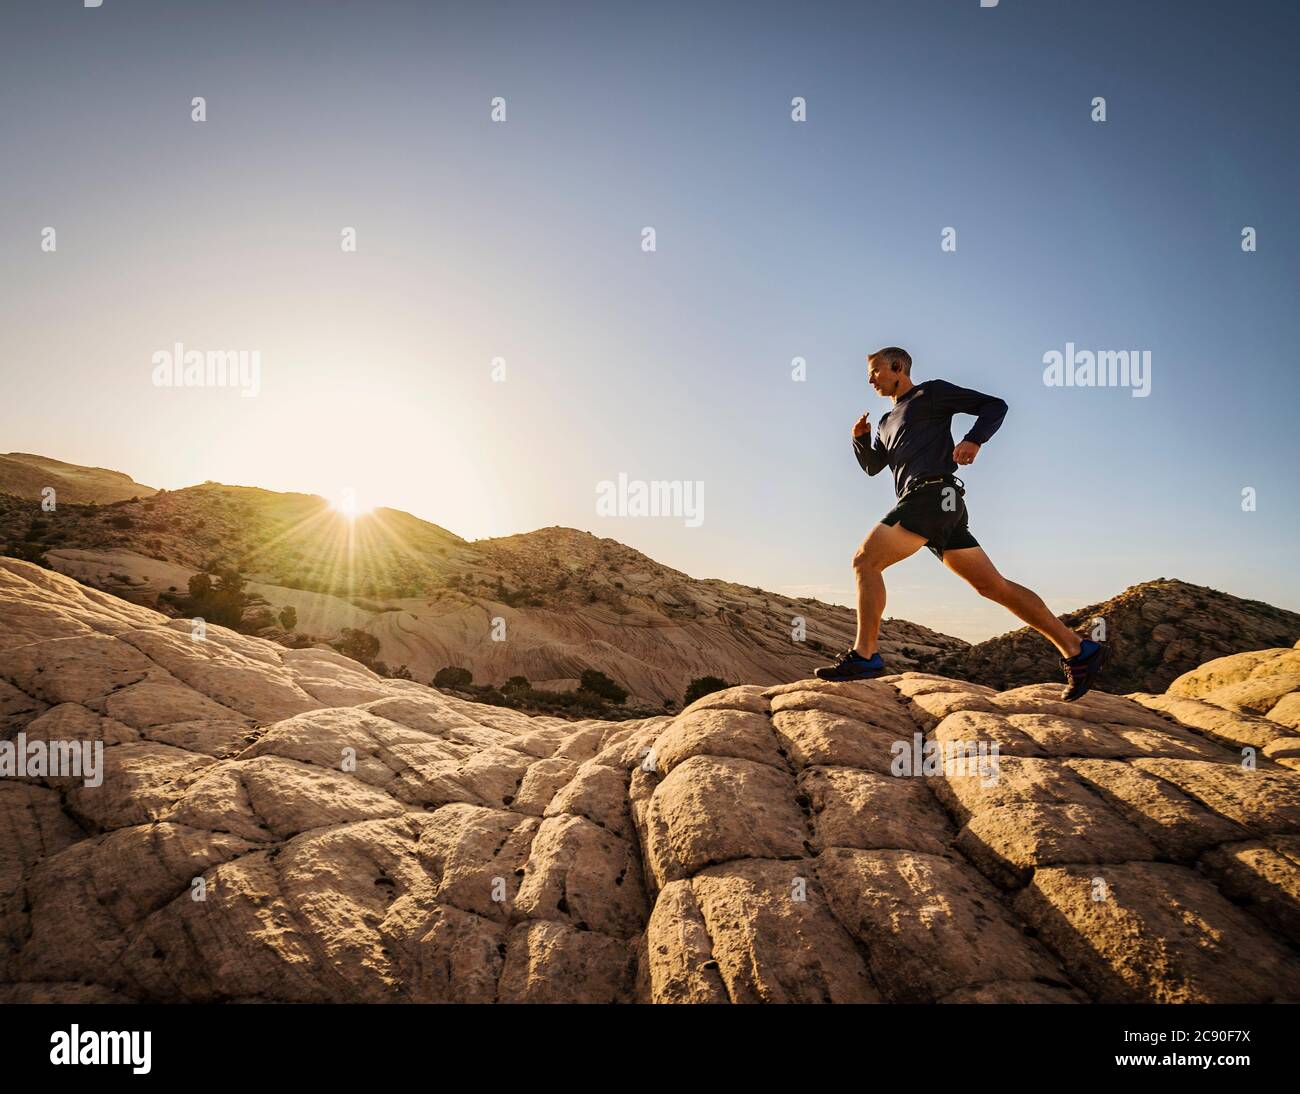 USA, Utah, St. George, man läuft in felsiger Landschaft Stockfoto